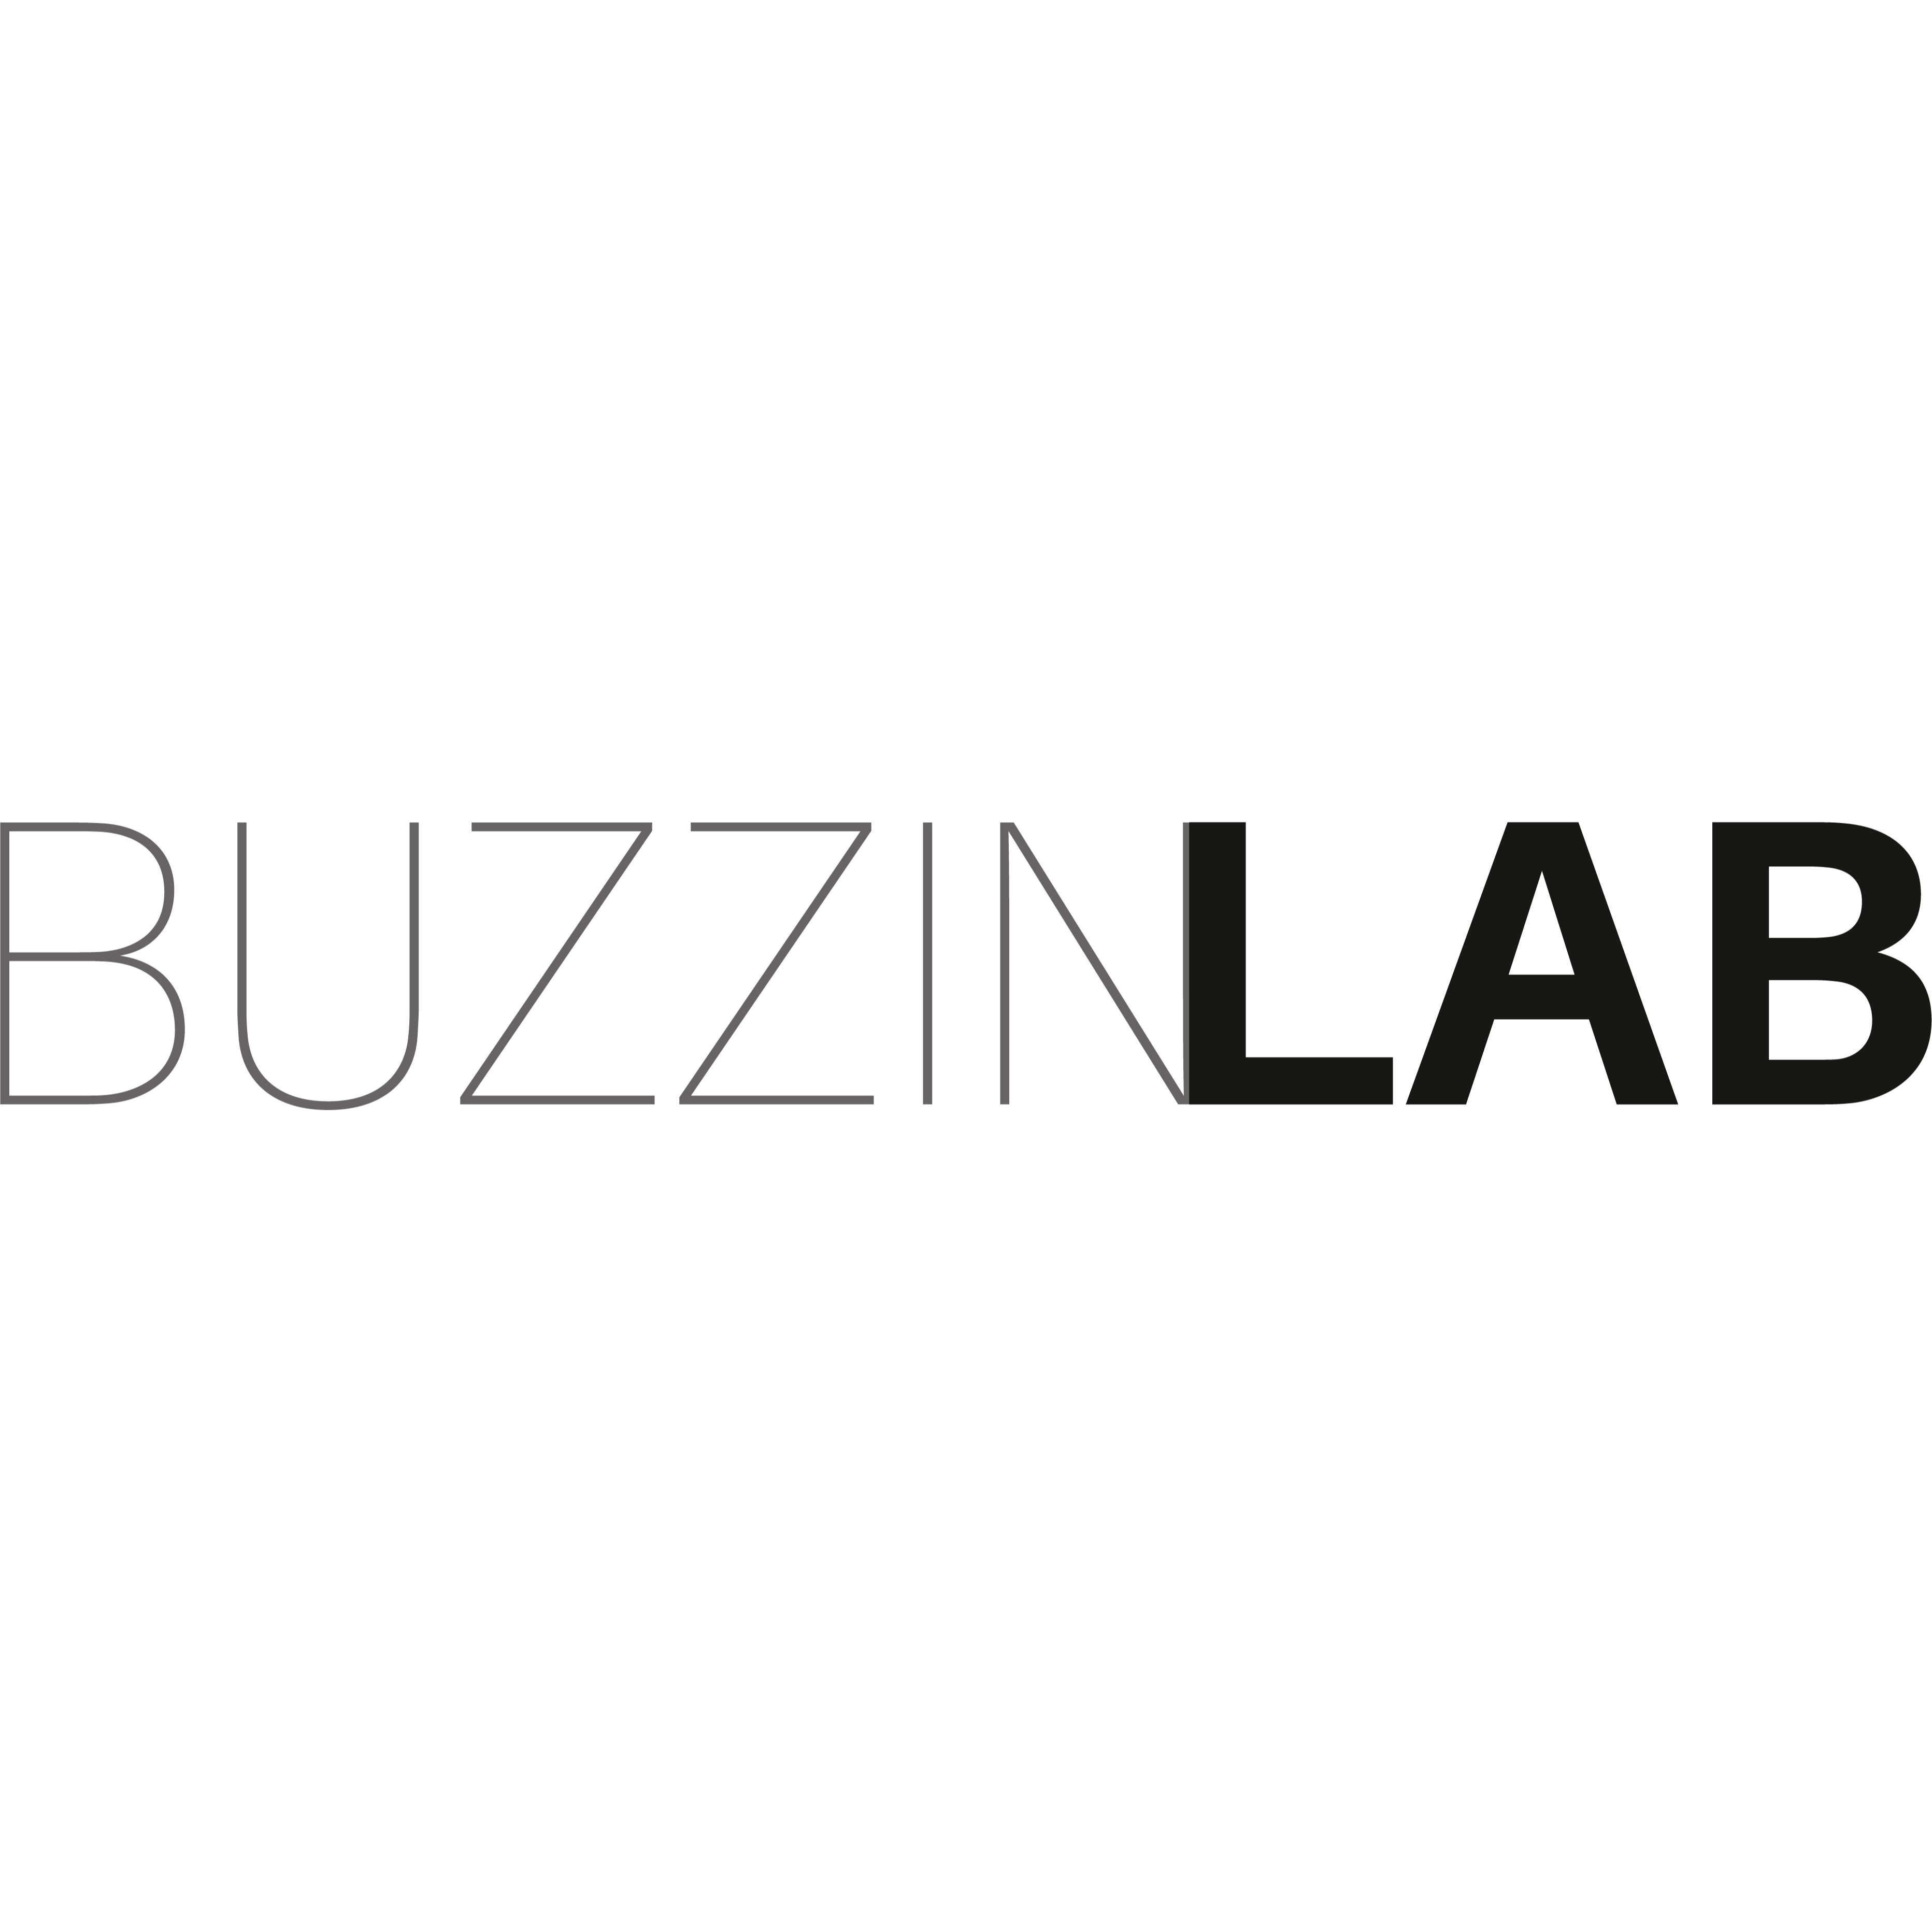 BUZZINLAB - The Club Office & Eventlocation Logo